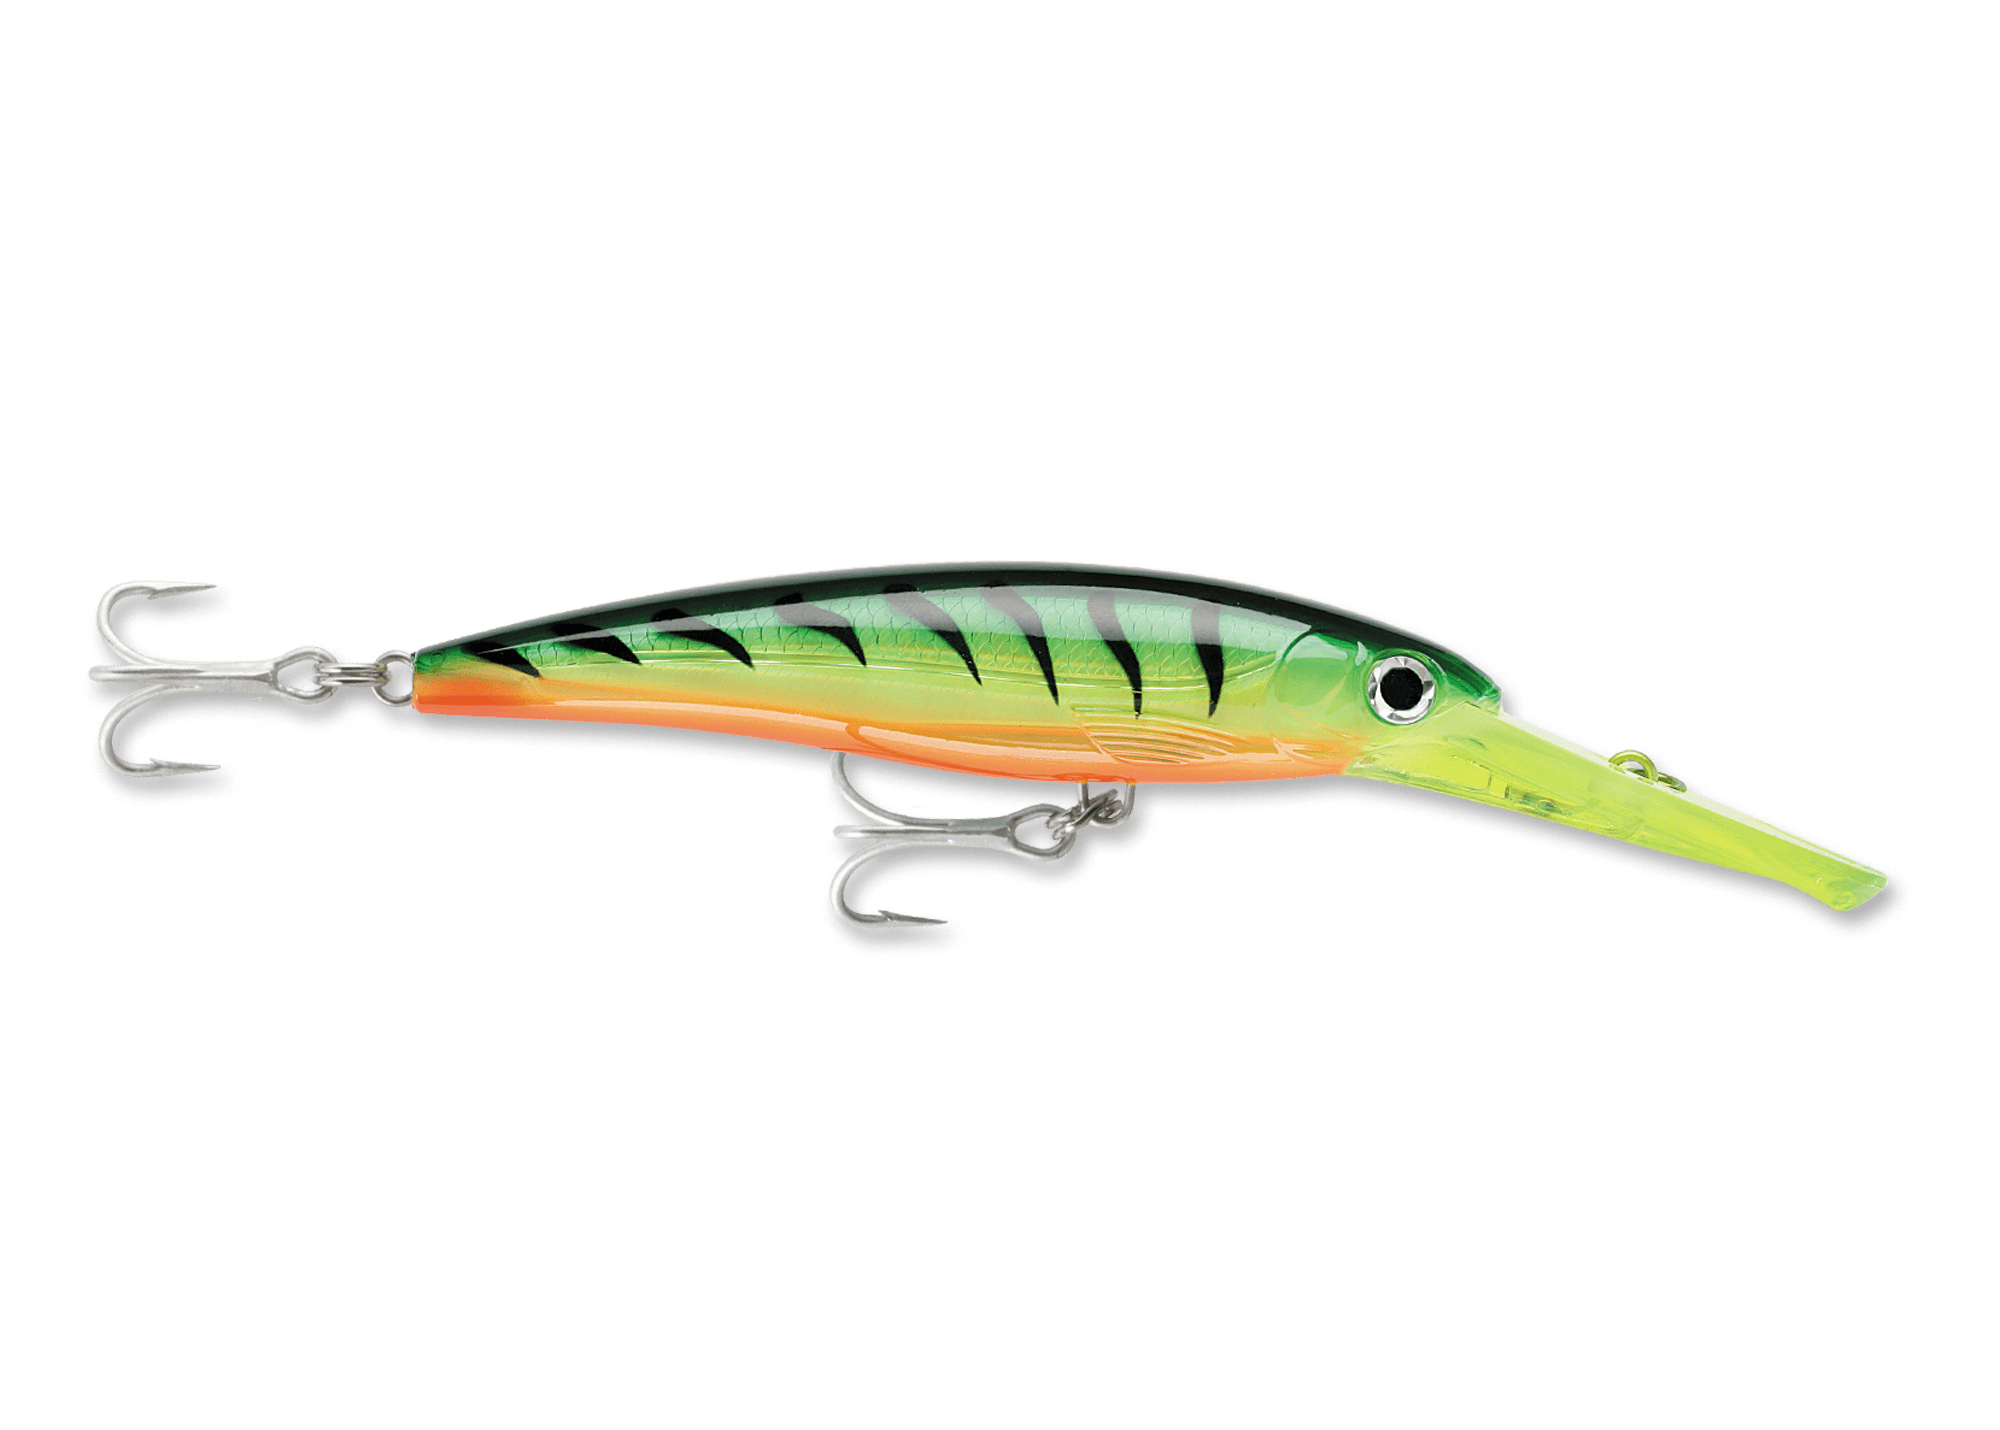 Mix 104.9 - Win this fantastic fishing pack from Anaconda